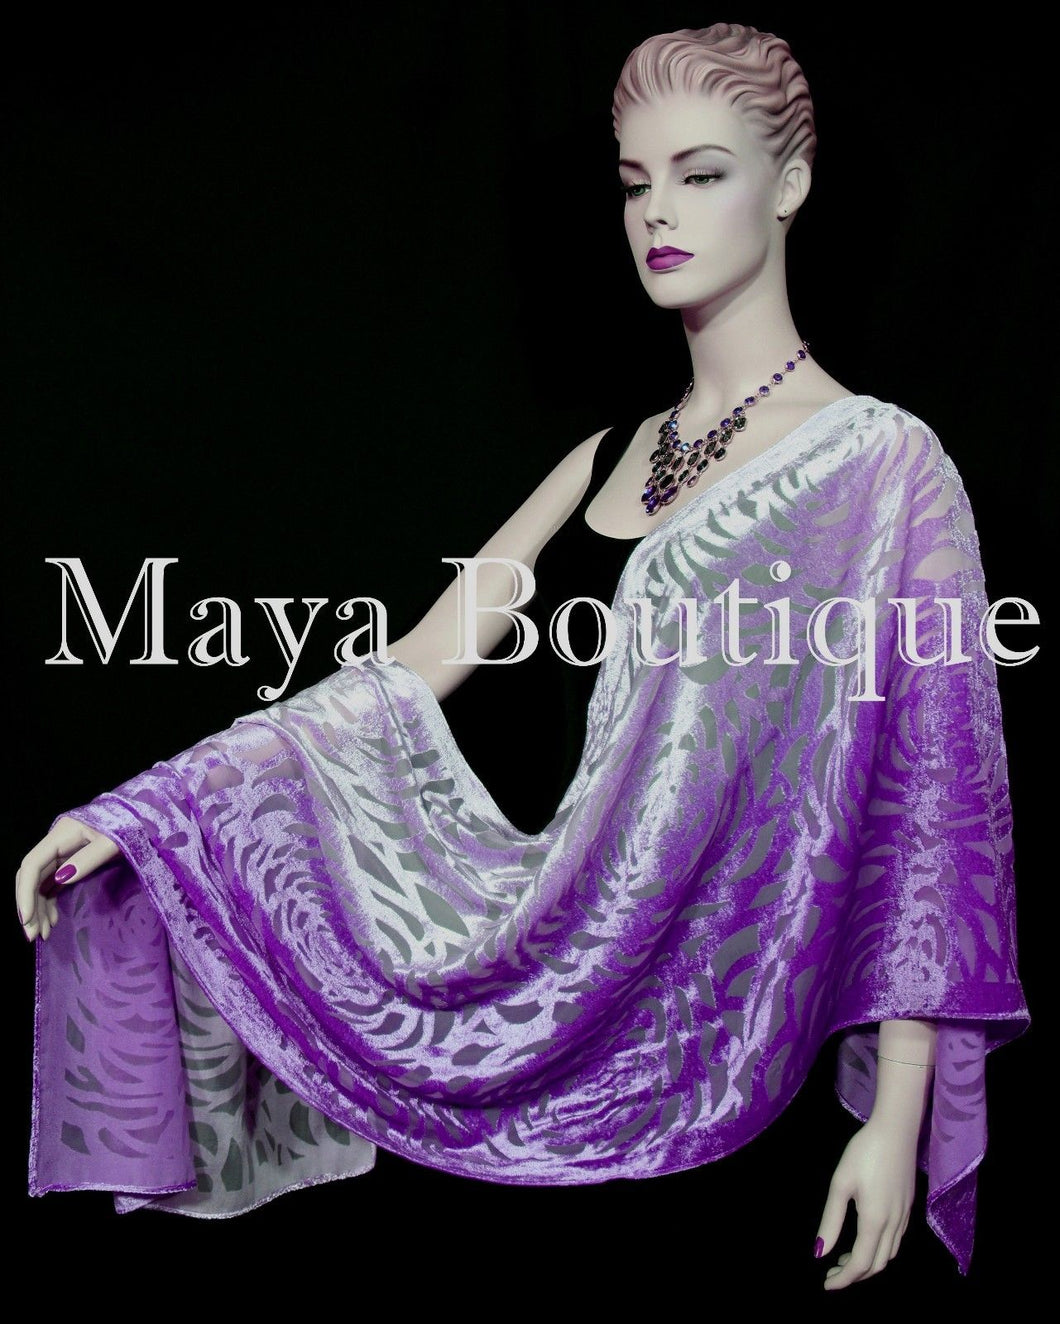 Maya Matazaro Hand Dyed Violet Ombre Camellia Shawl Wrap Scarf Burnout Velvet